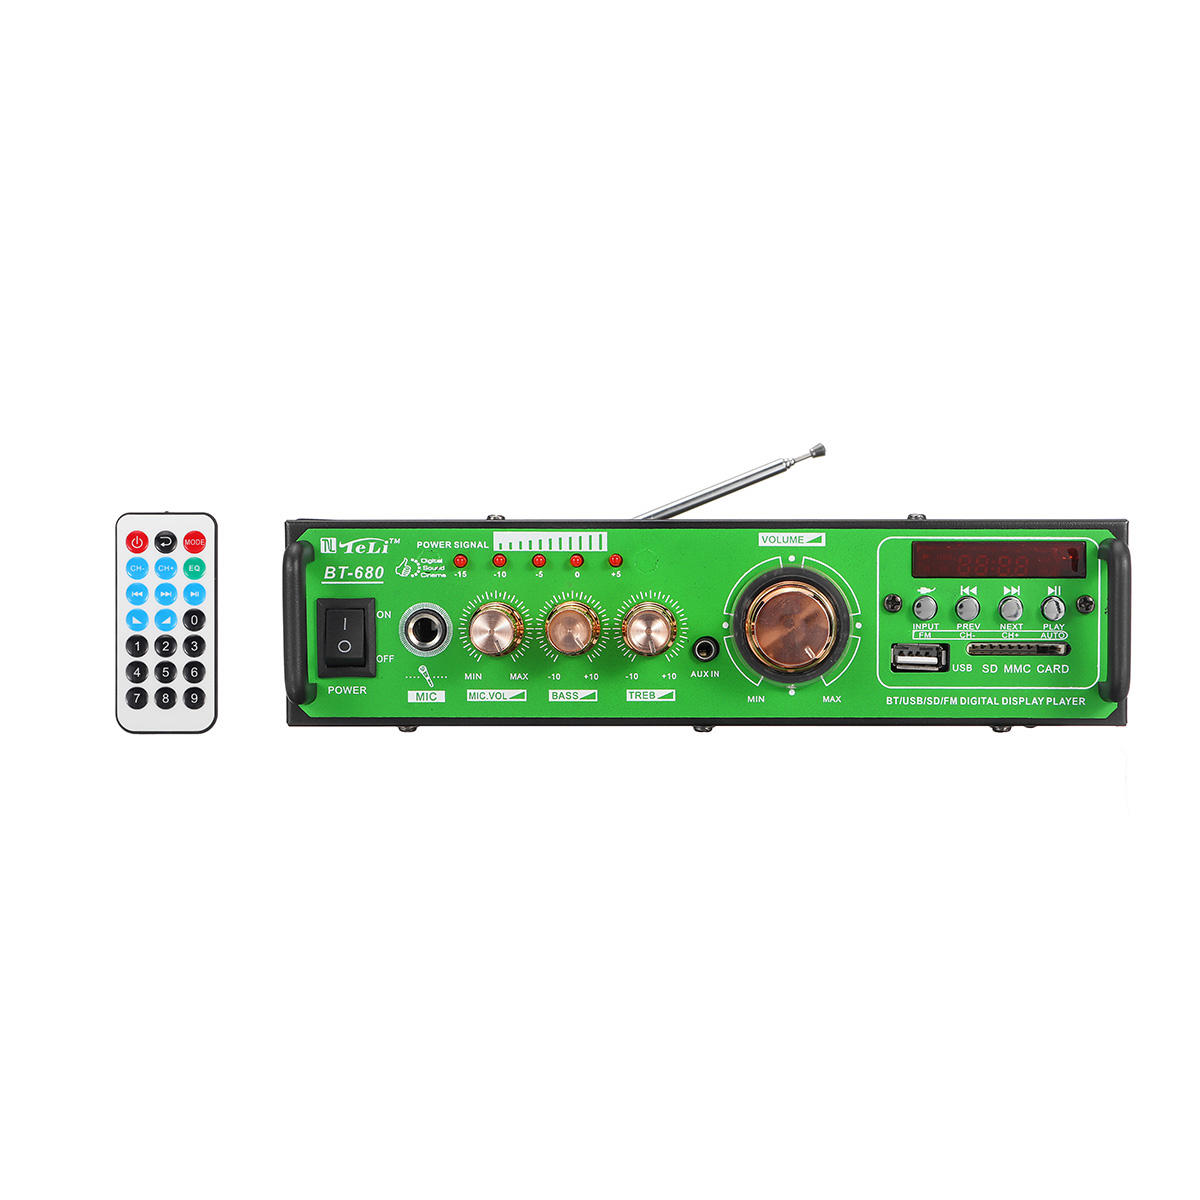 500W Home Car Audio Digital bluetooth Stereo Amplifier BT/USB/SD/FM/Mic + Remote